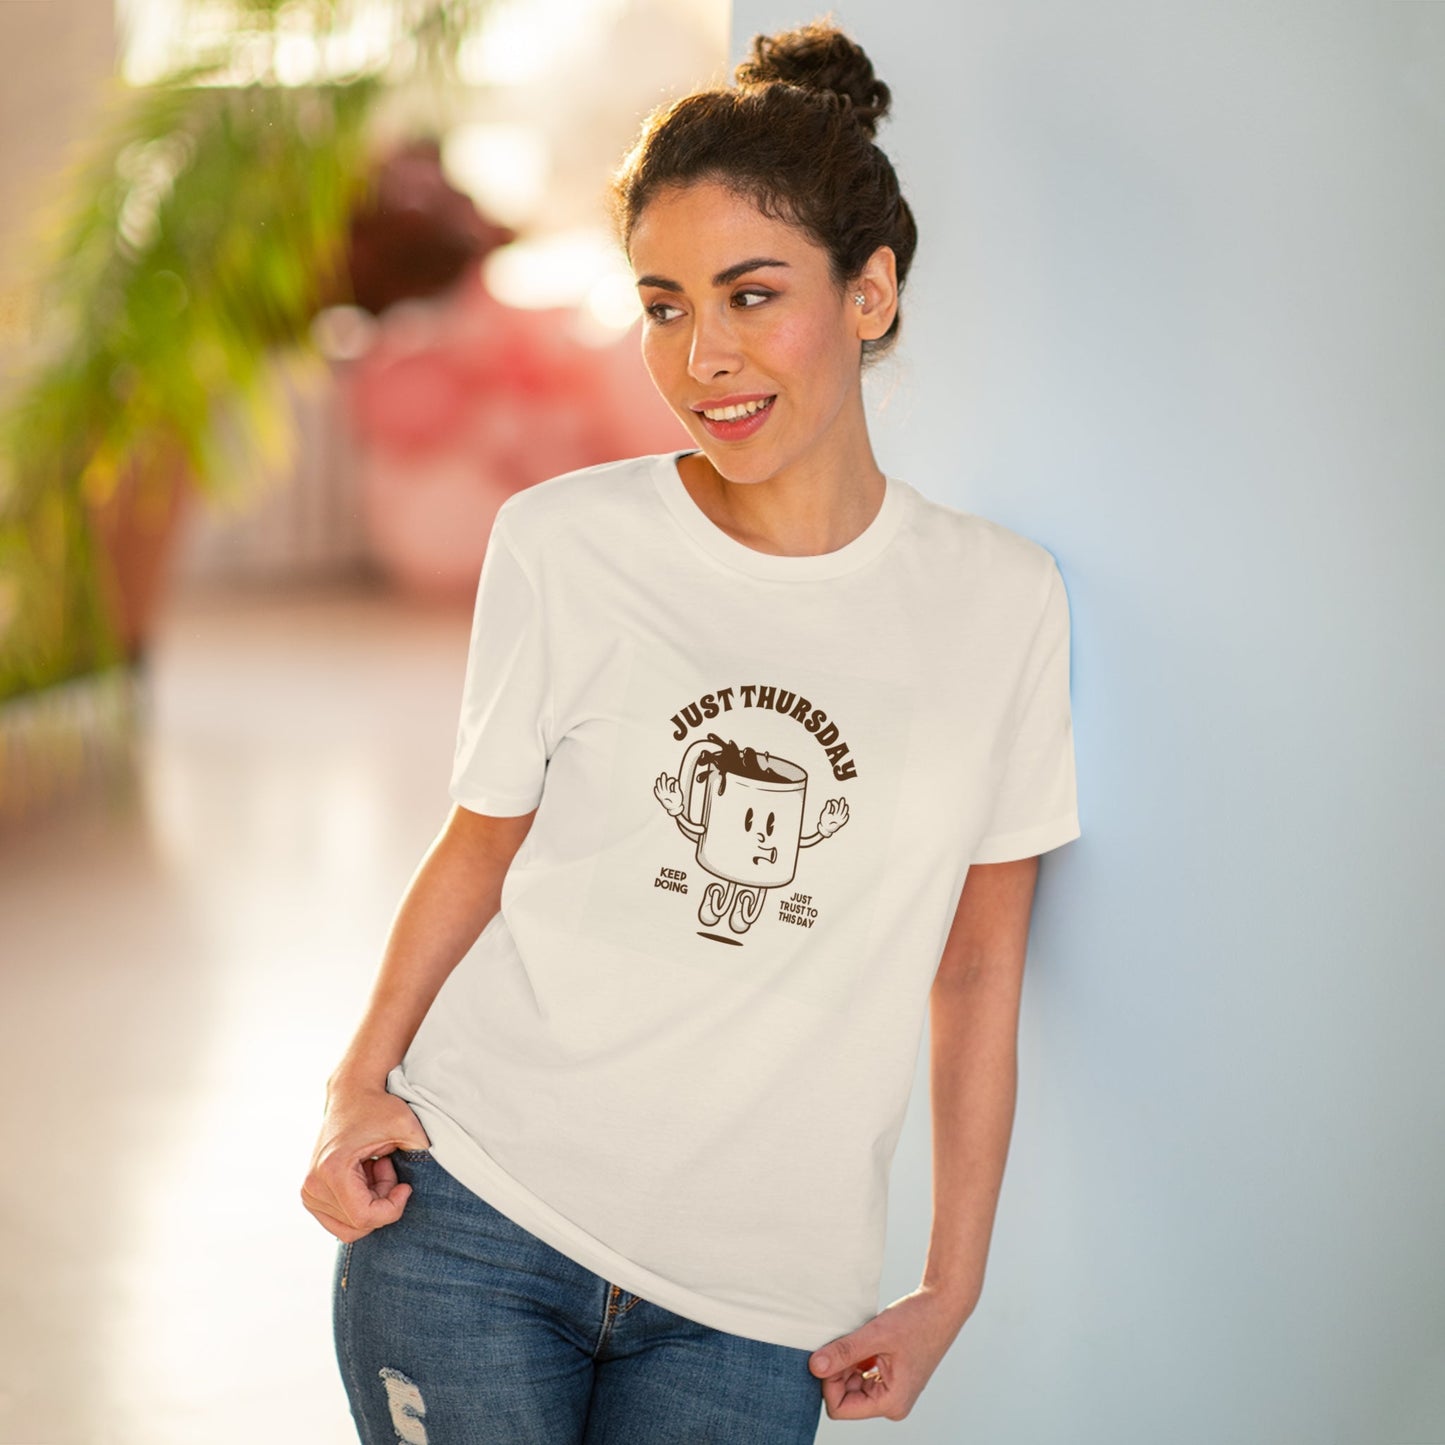 Positive 'Just Thursday' Retro Organic Cotton T-shirt - Fun Tshirt